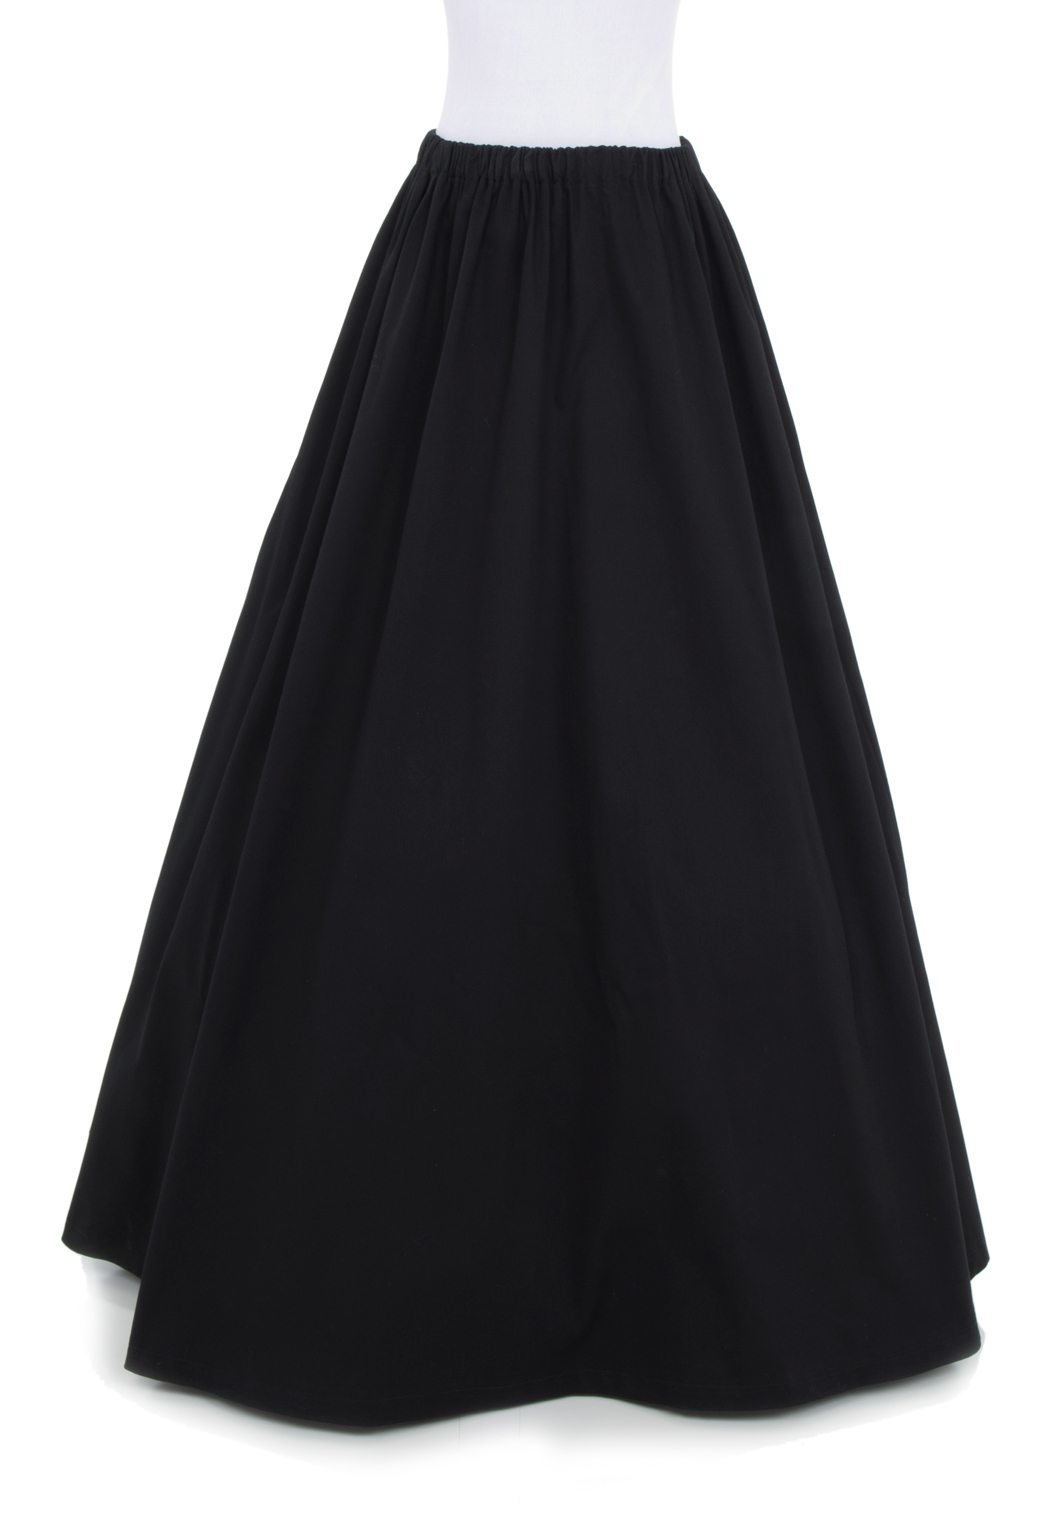 Clearance Skirt - Black - XXXL, 35